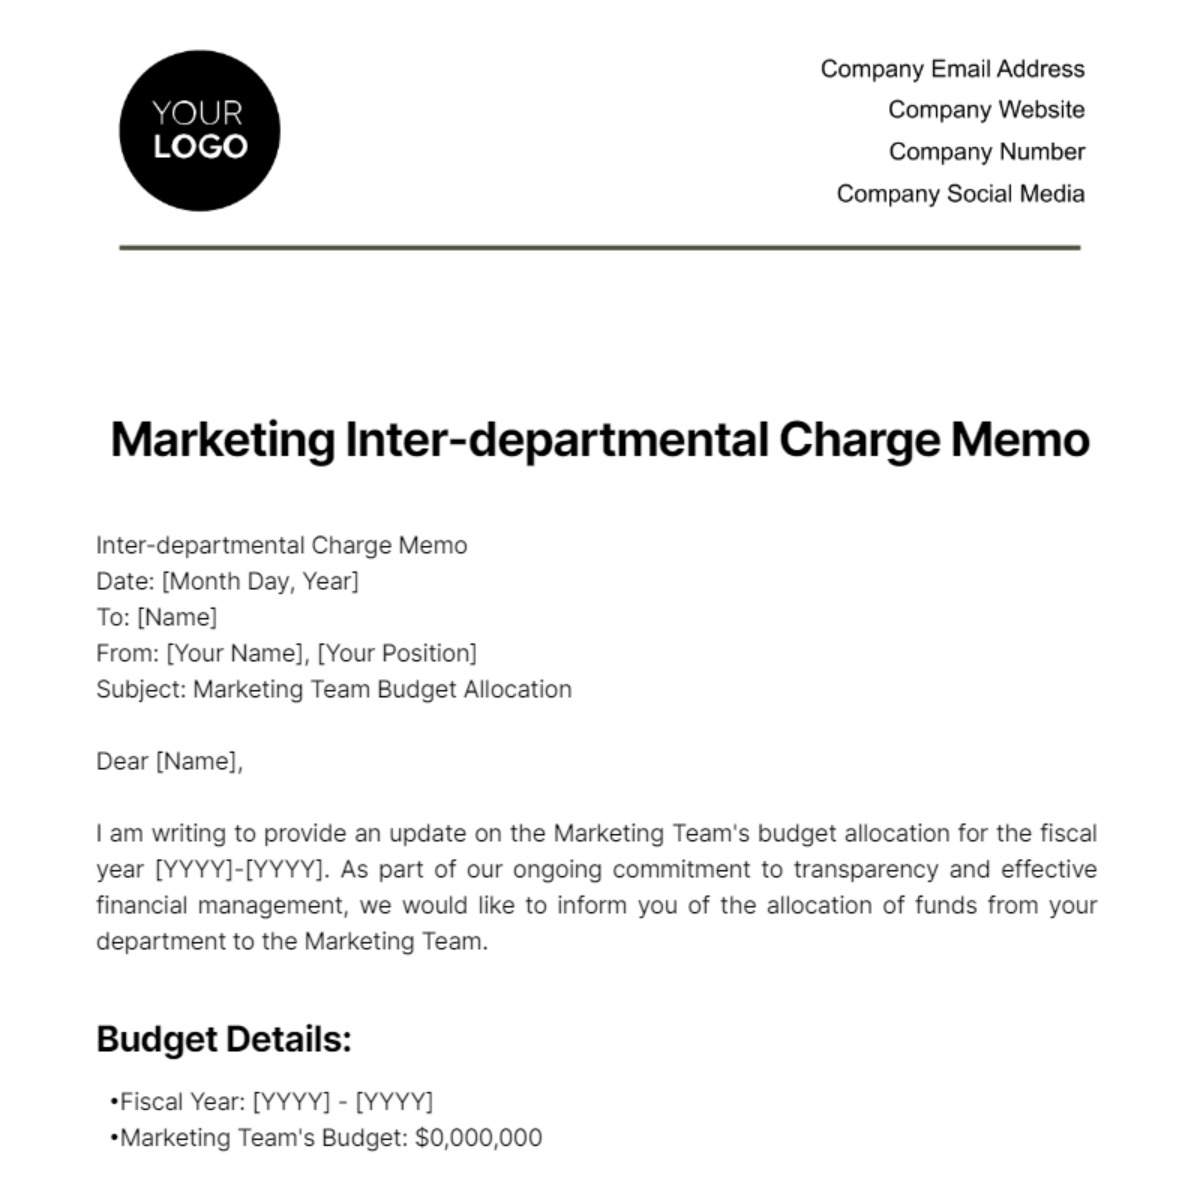 Marketing Inter-departmental Charge Memo Template